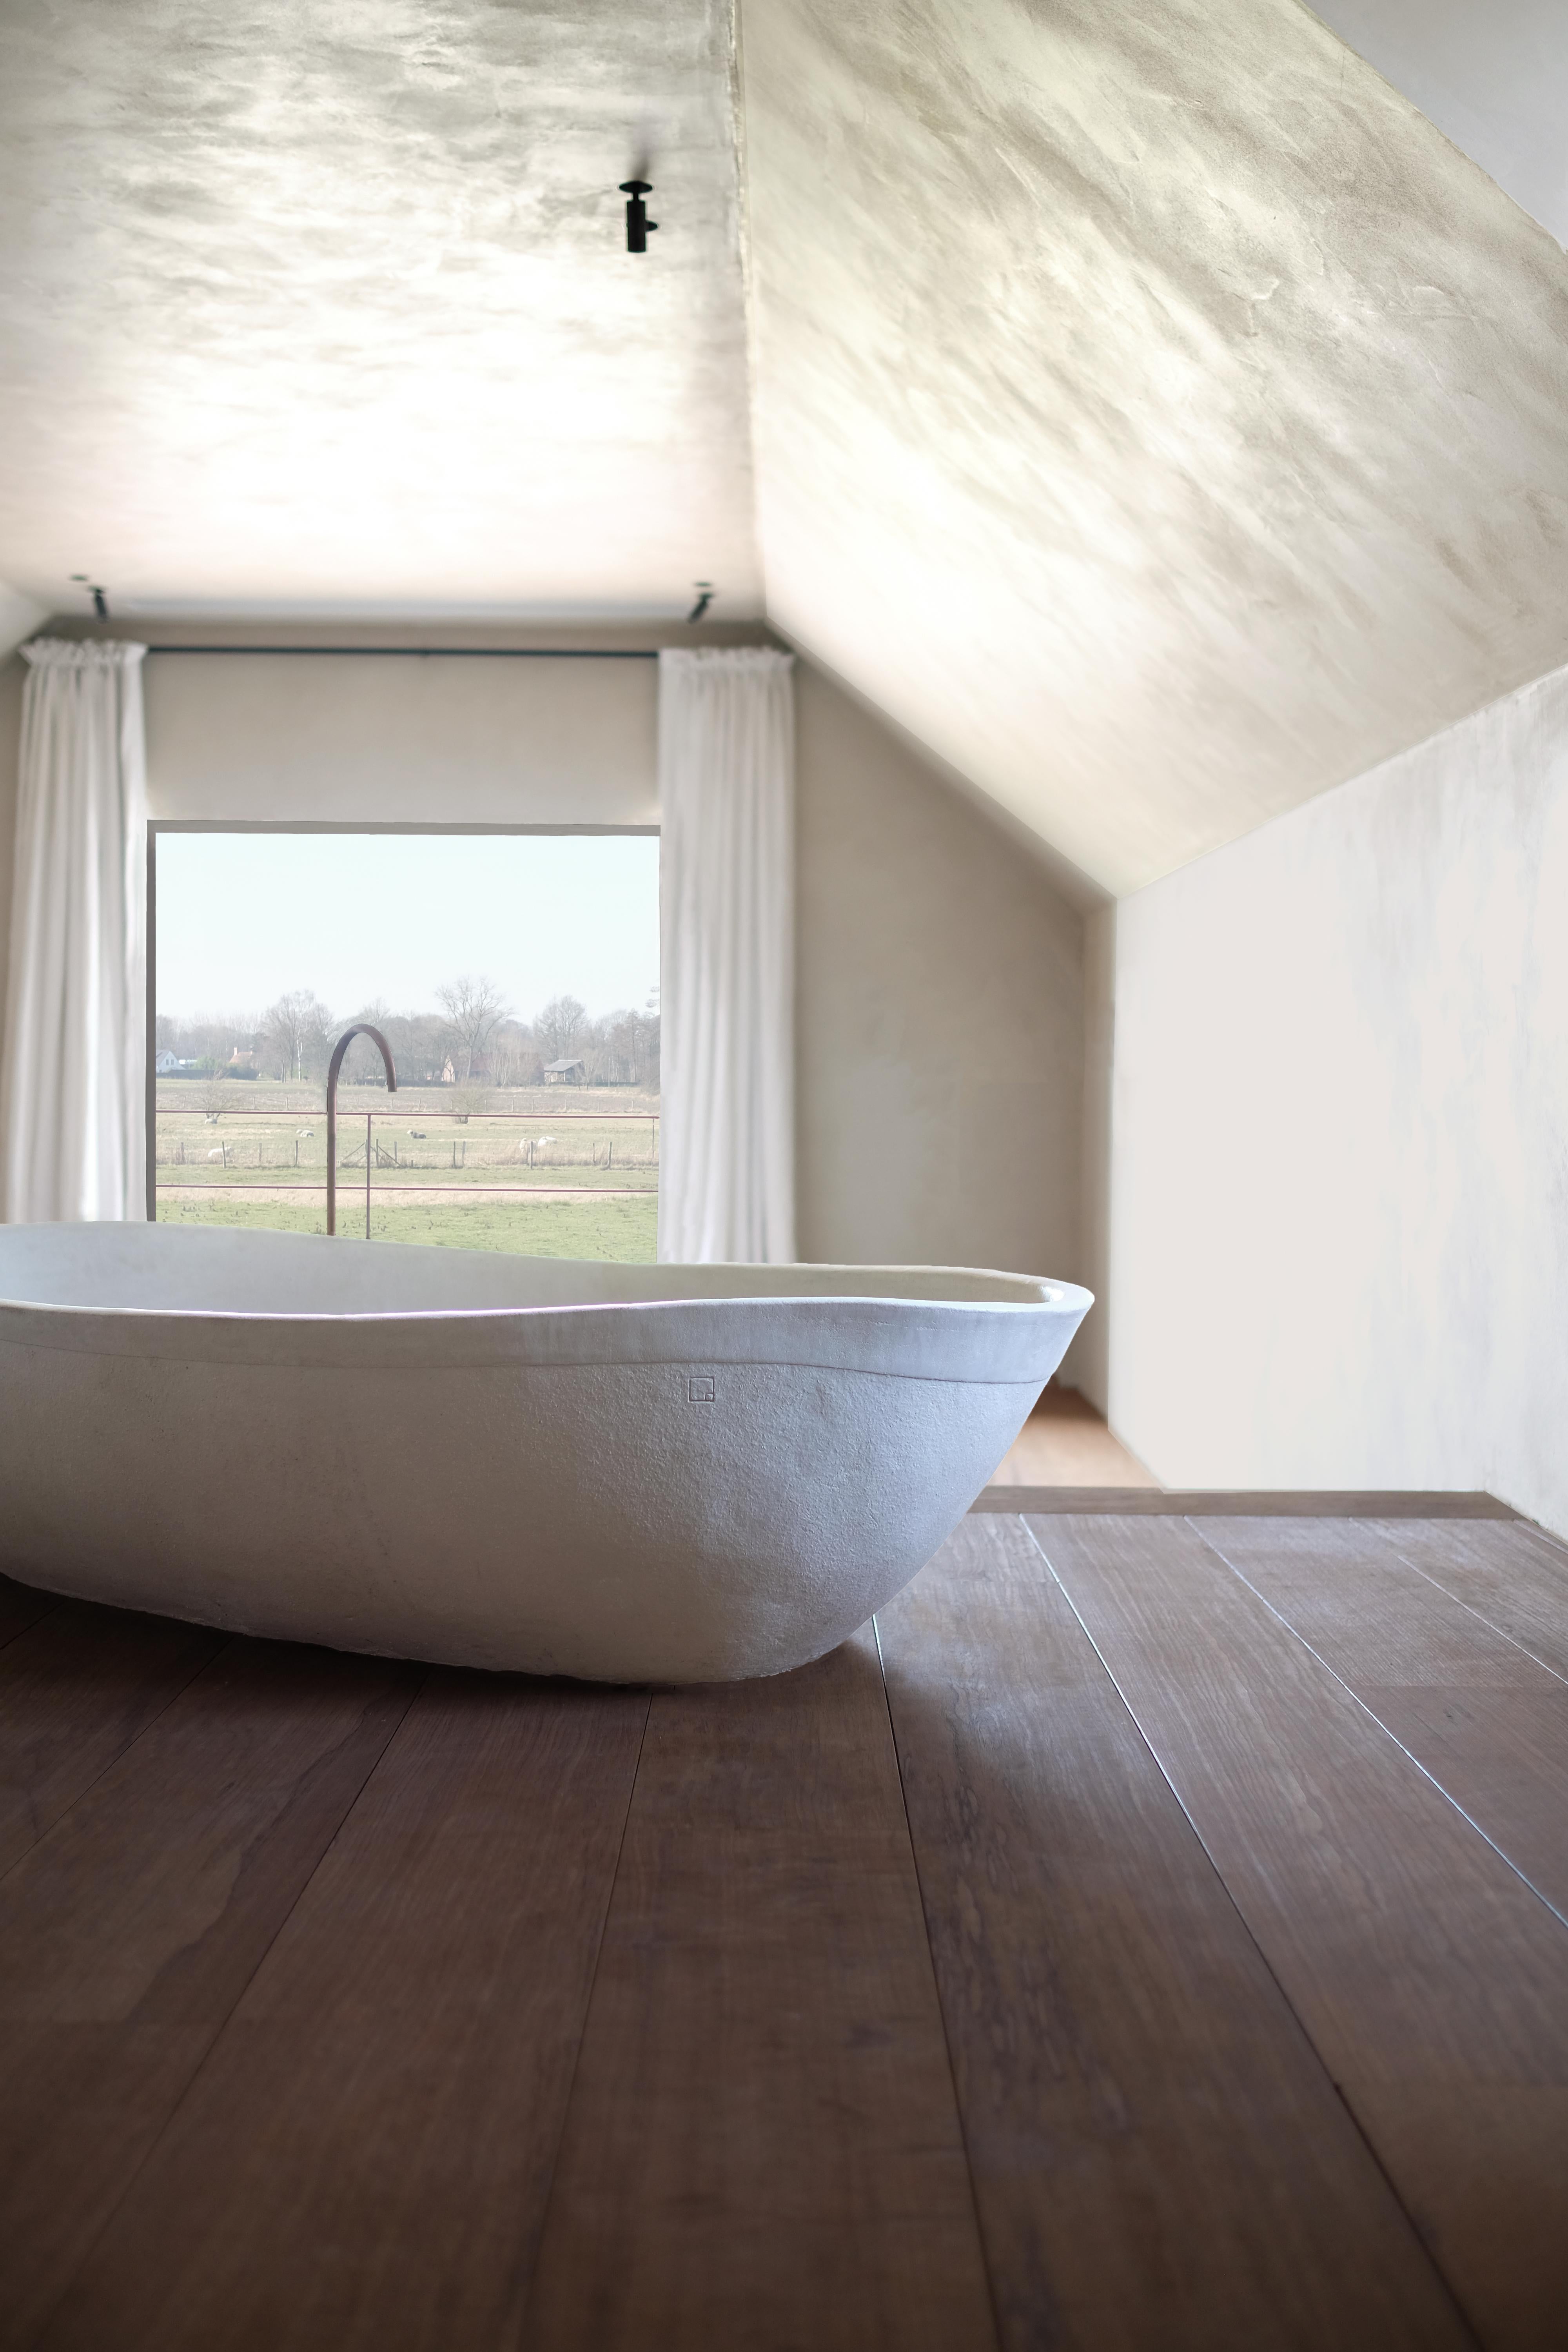 Belgian Large Clay Bathtub by Studio Loho